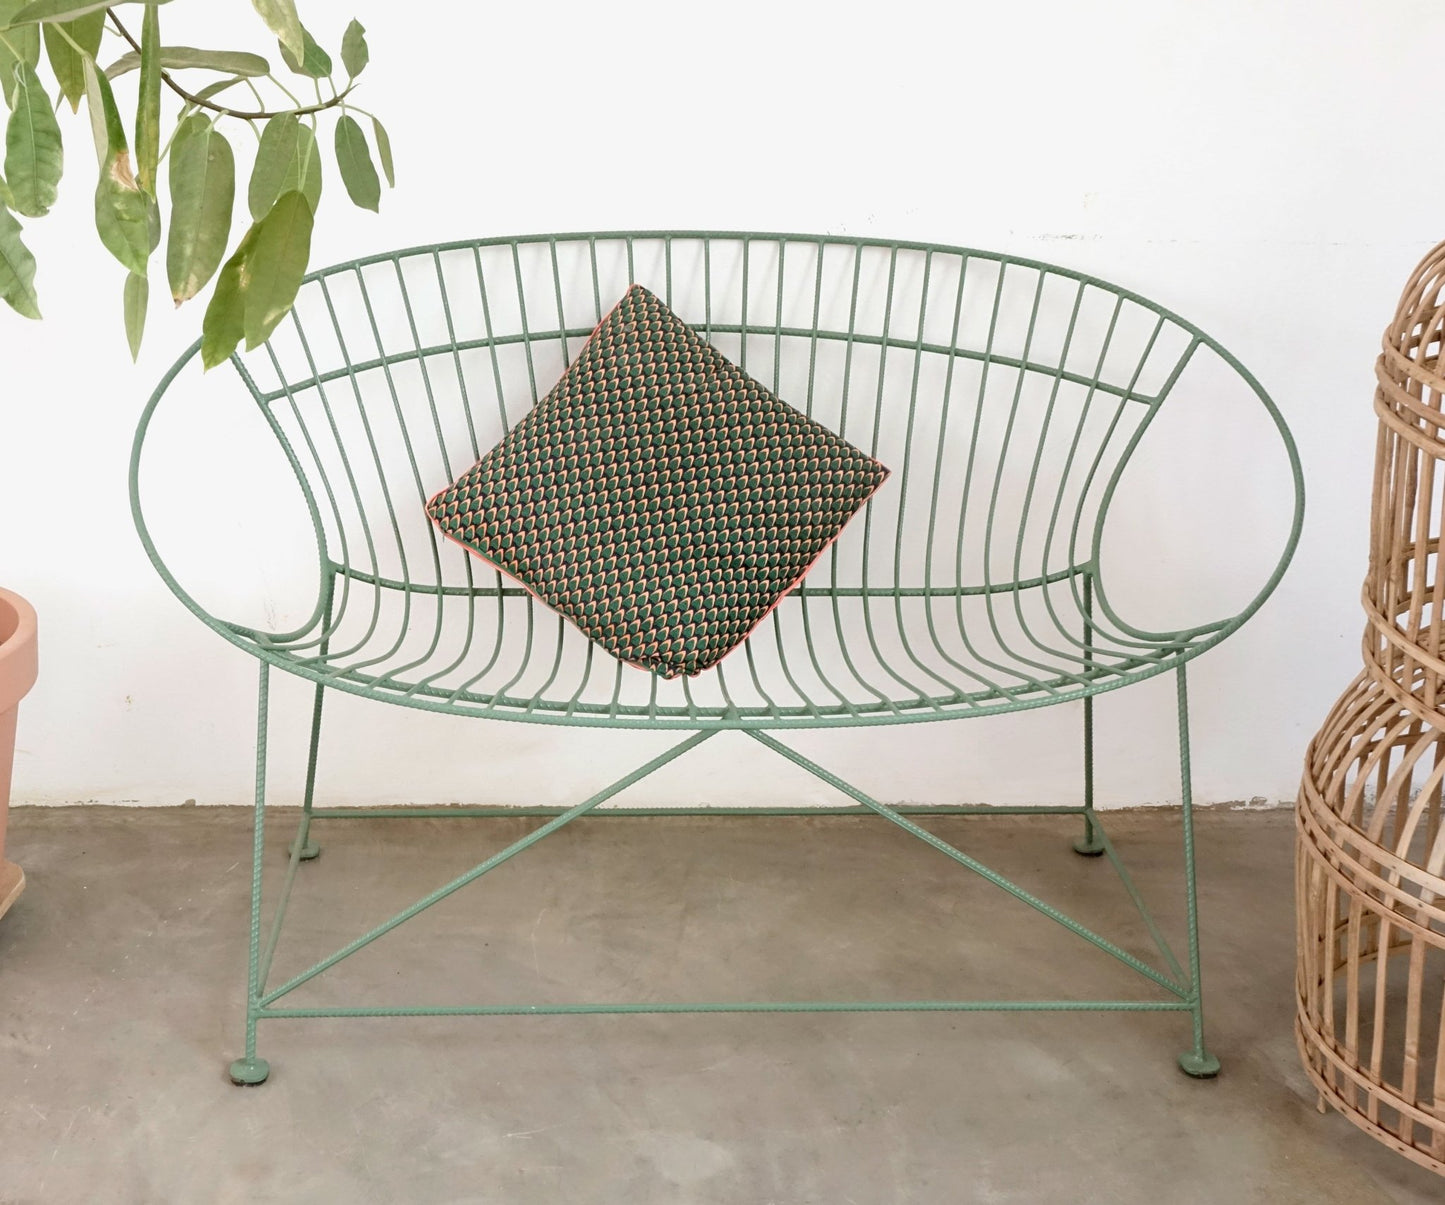 Moss metal garden bench / 2 seats / Character Furniture - modecorarts